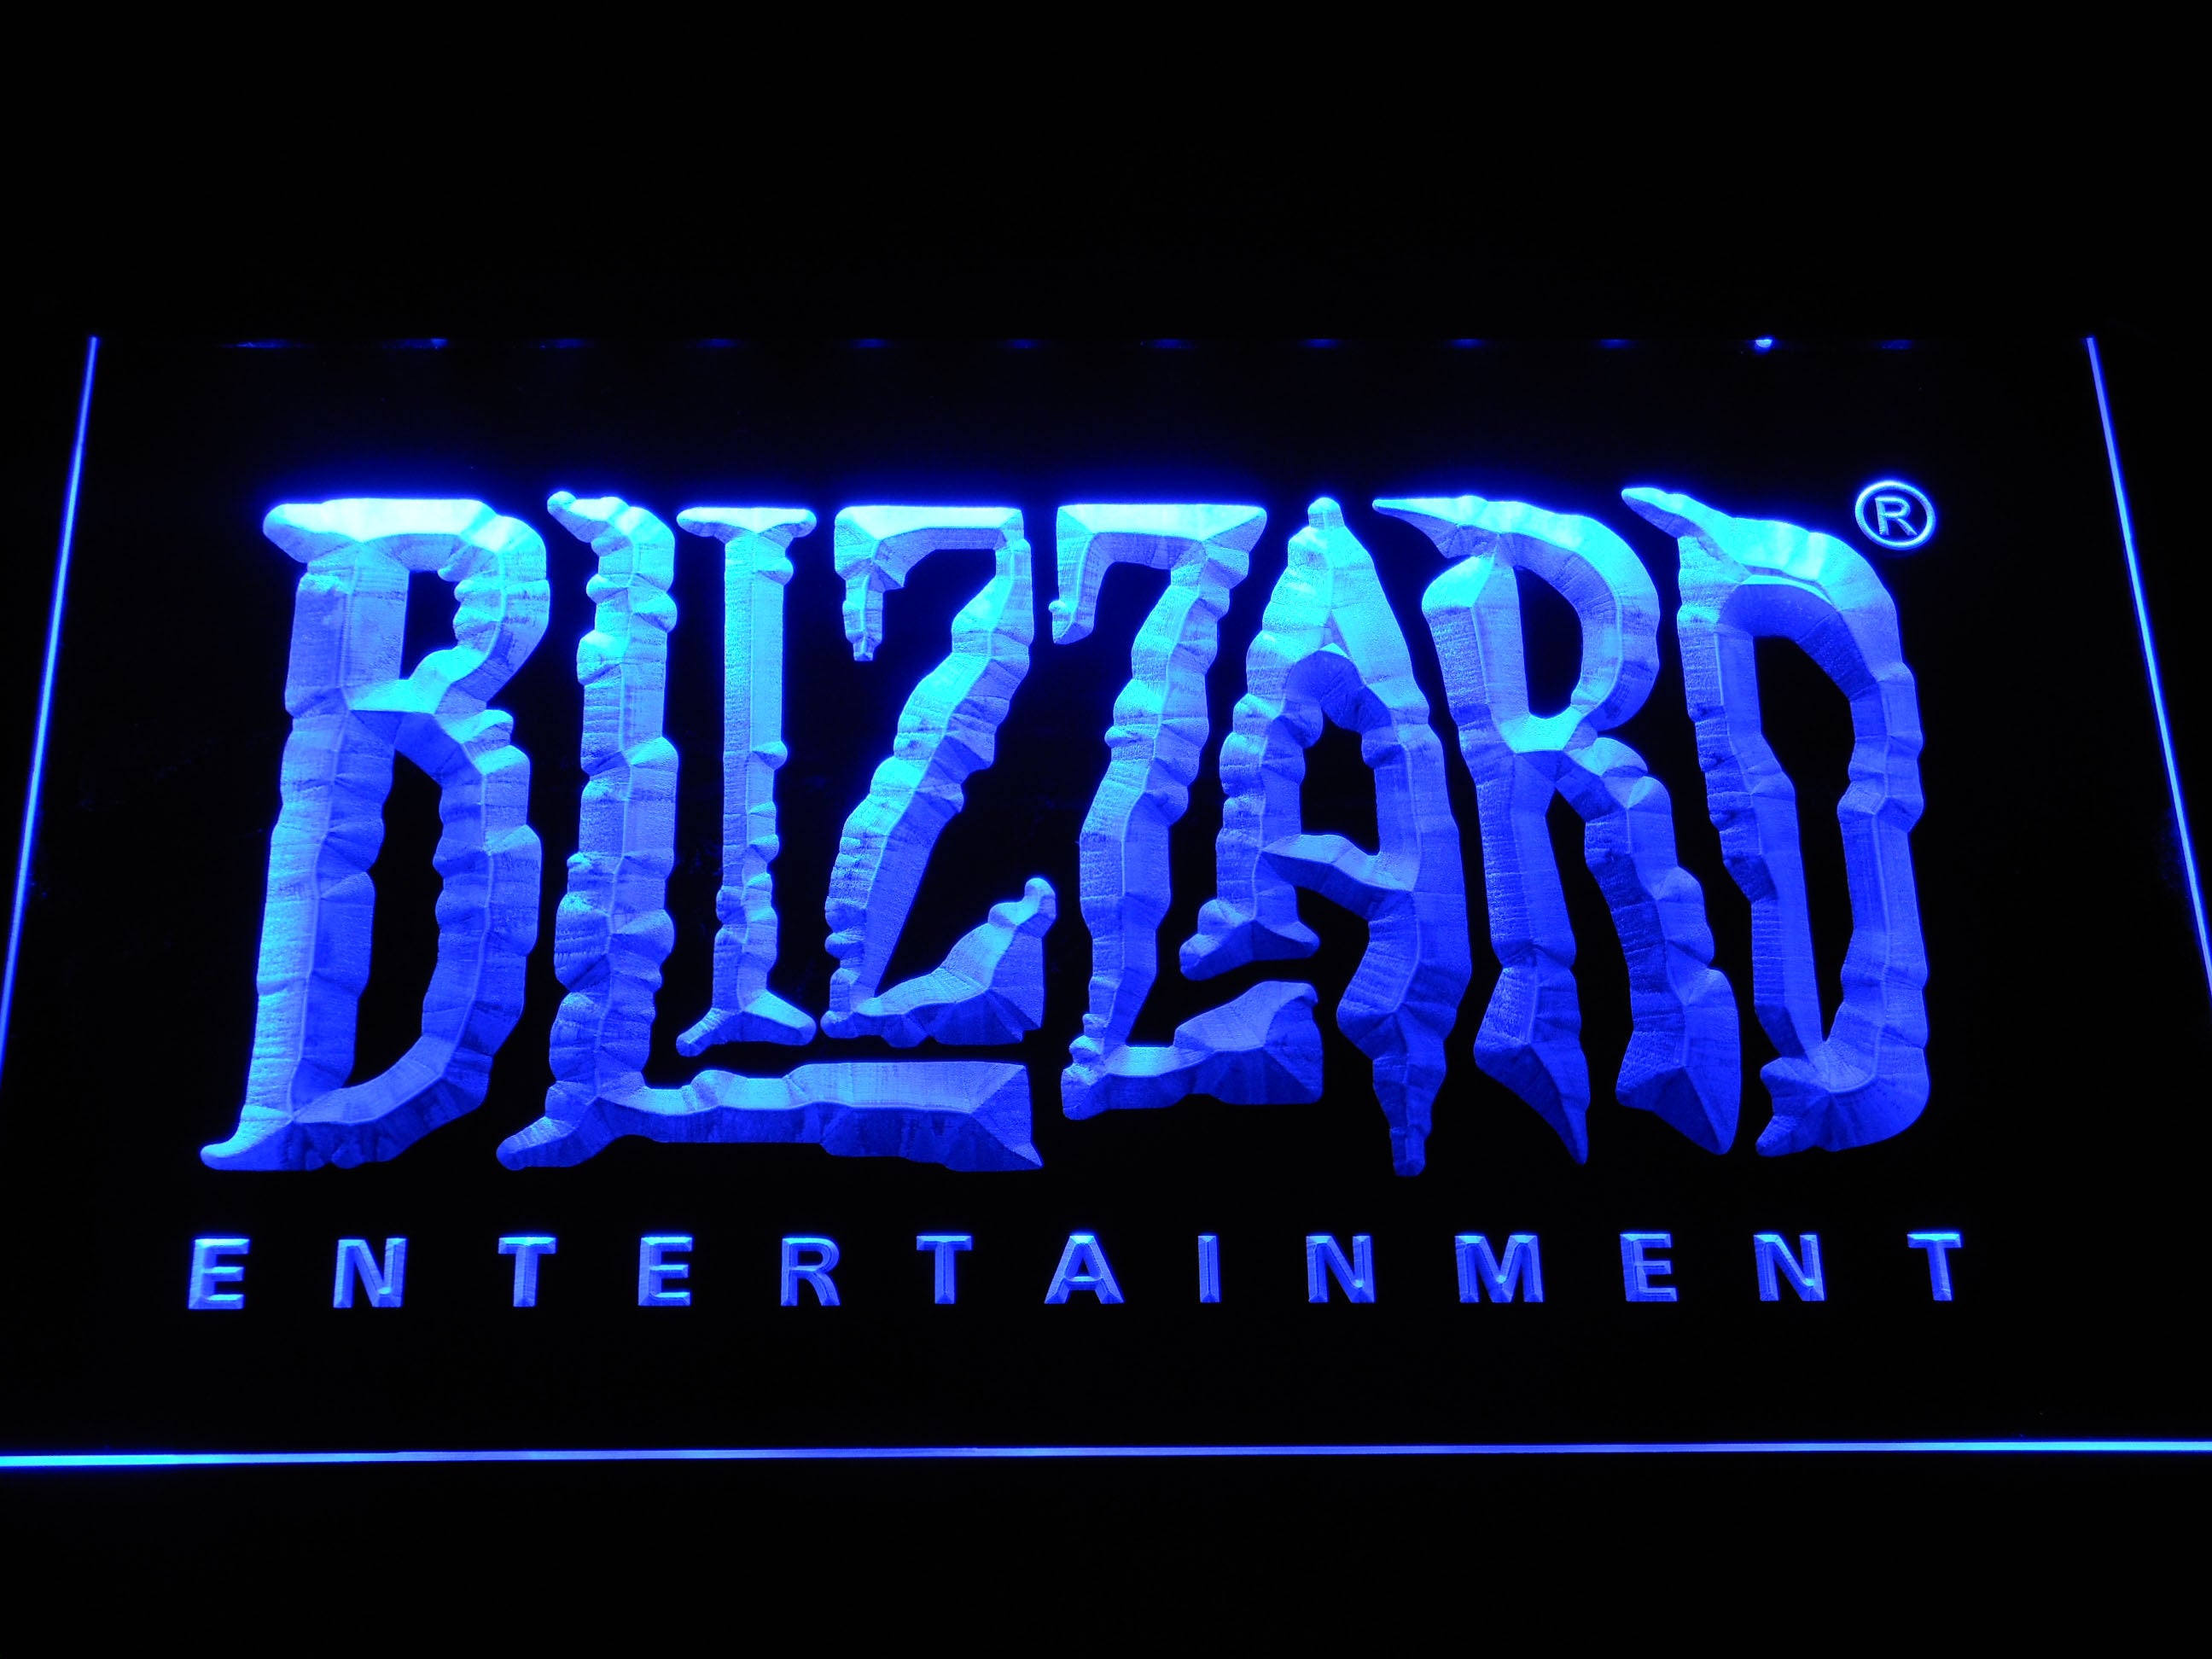 Blizzard Entertainment Neon Light LED Sign